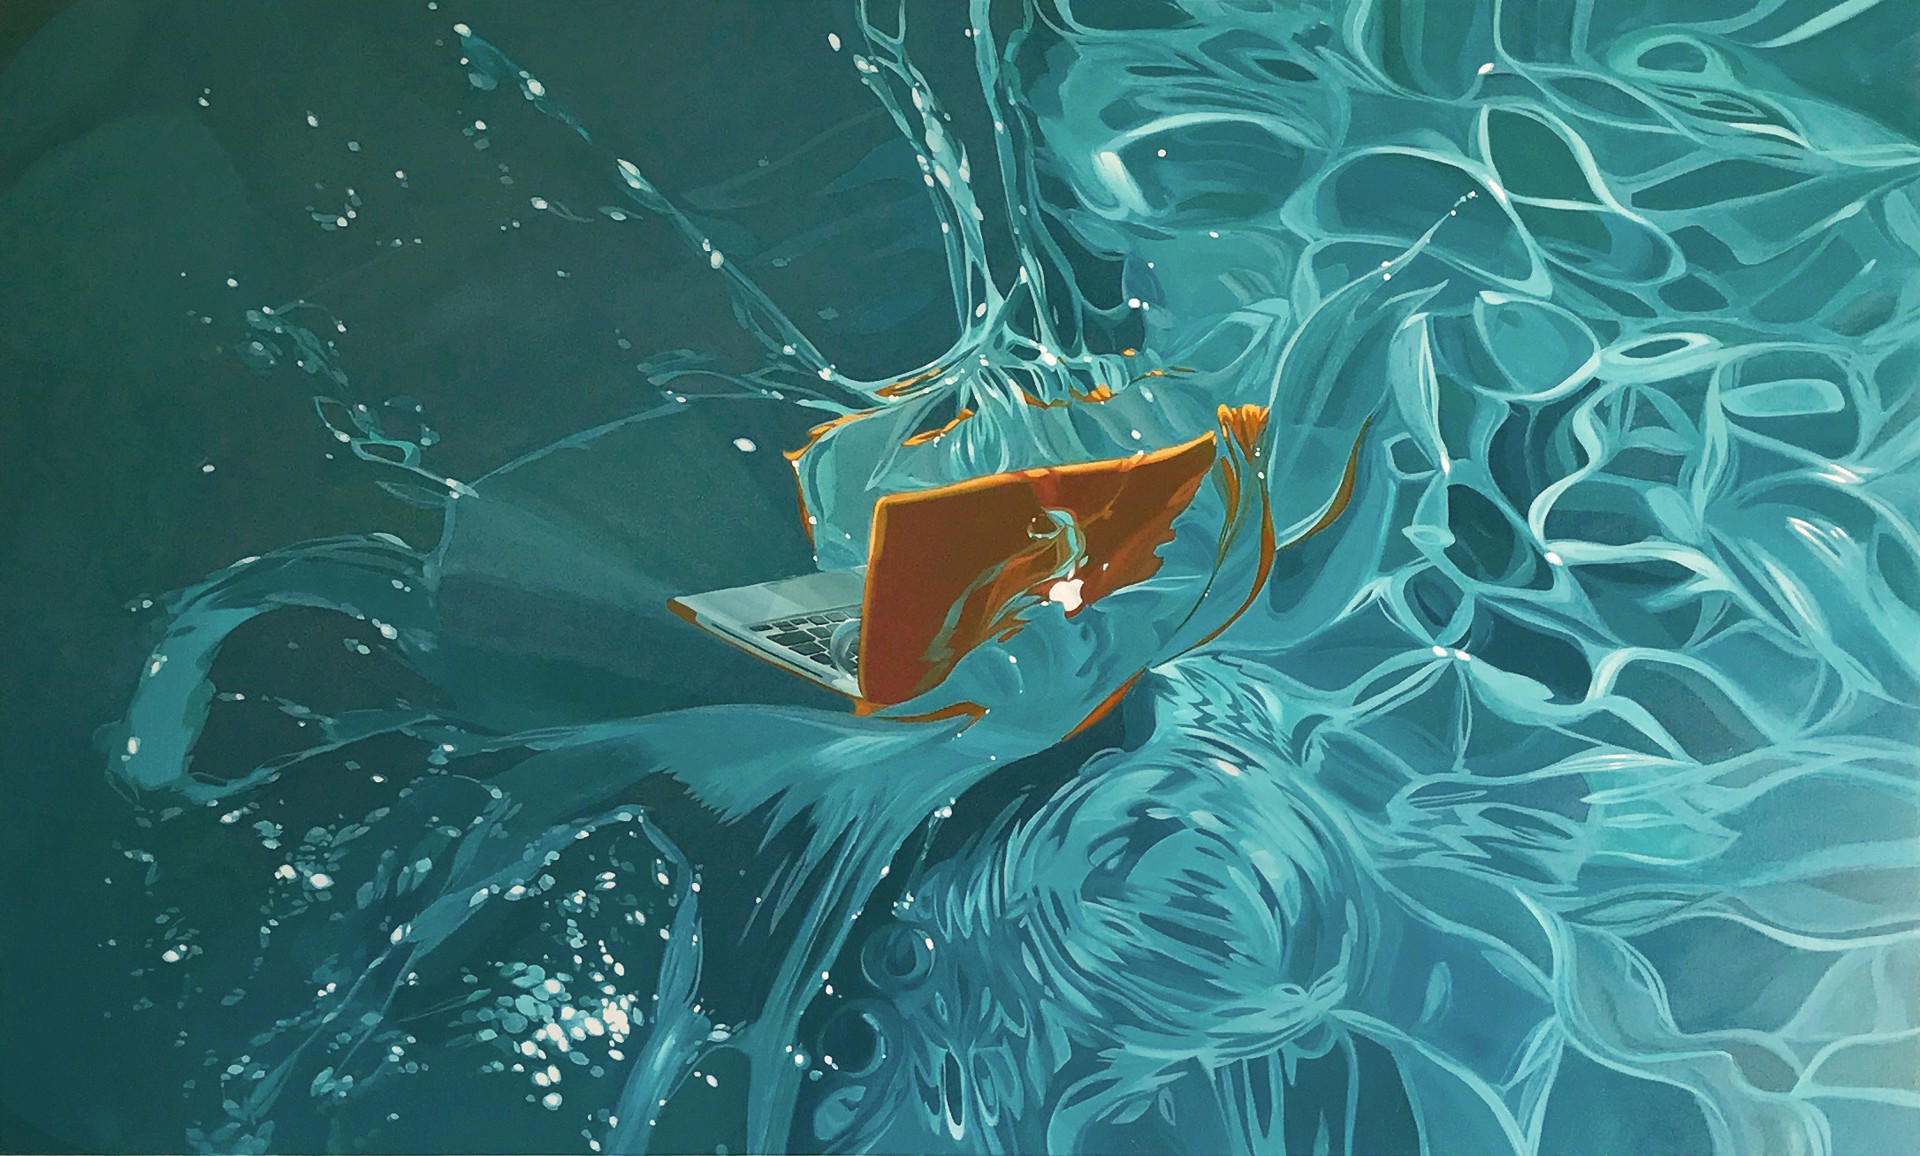 Mac in Water by Benjamin Anderson